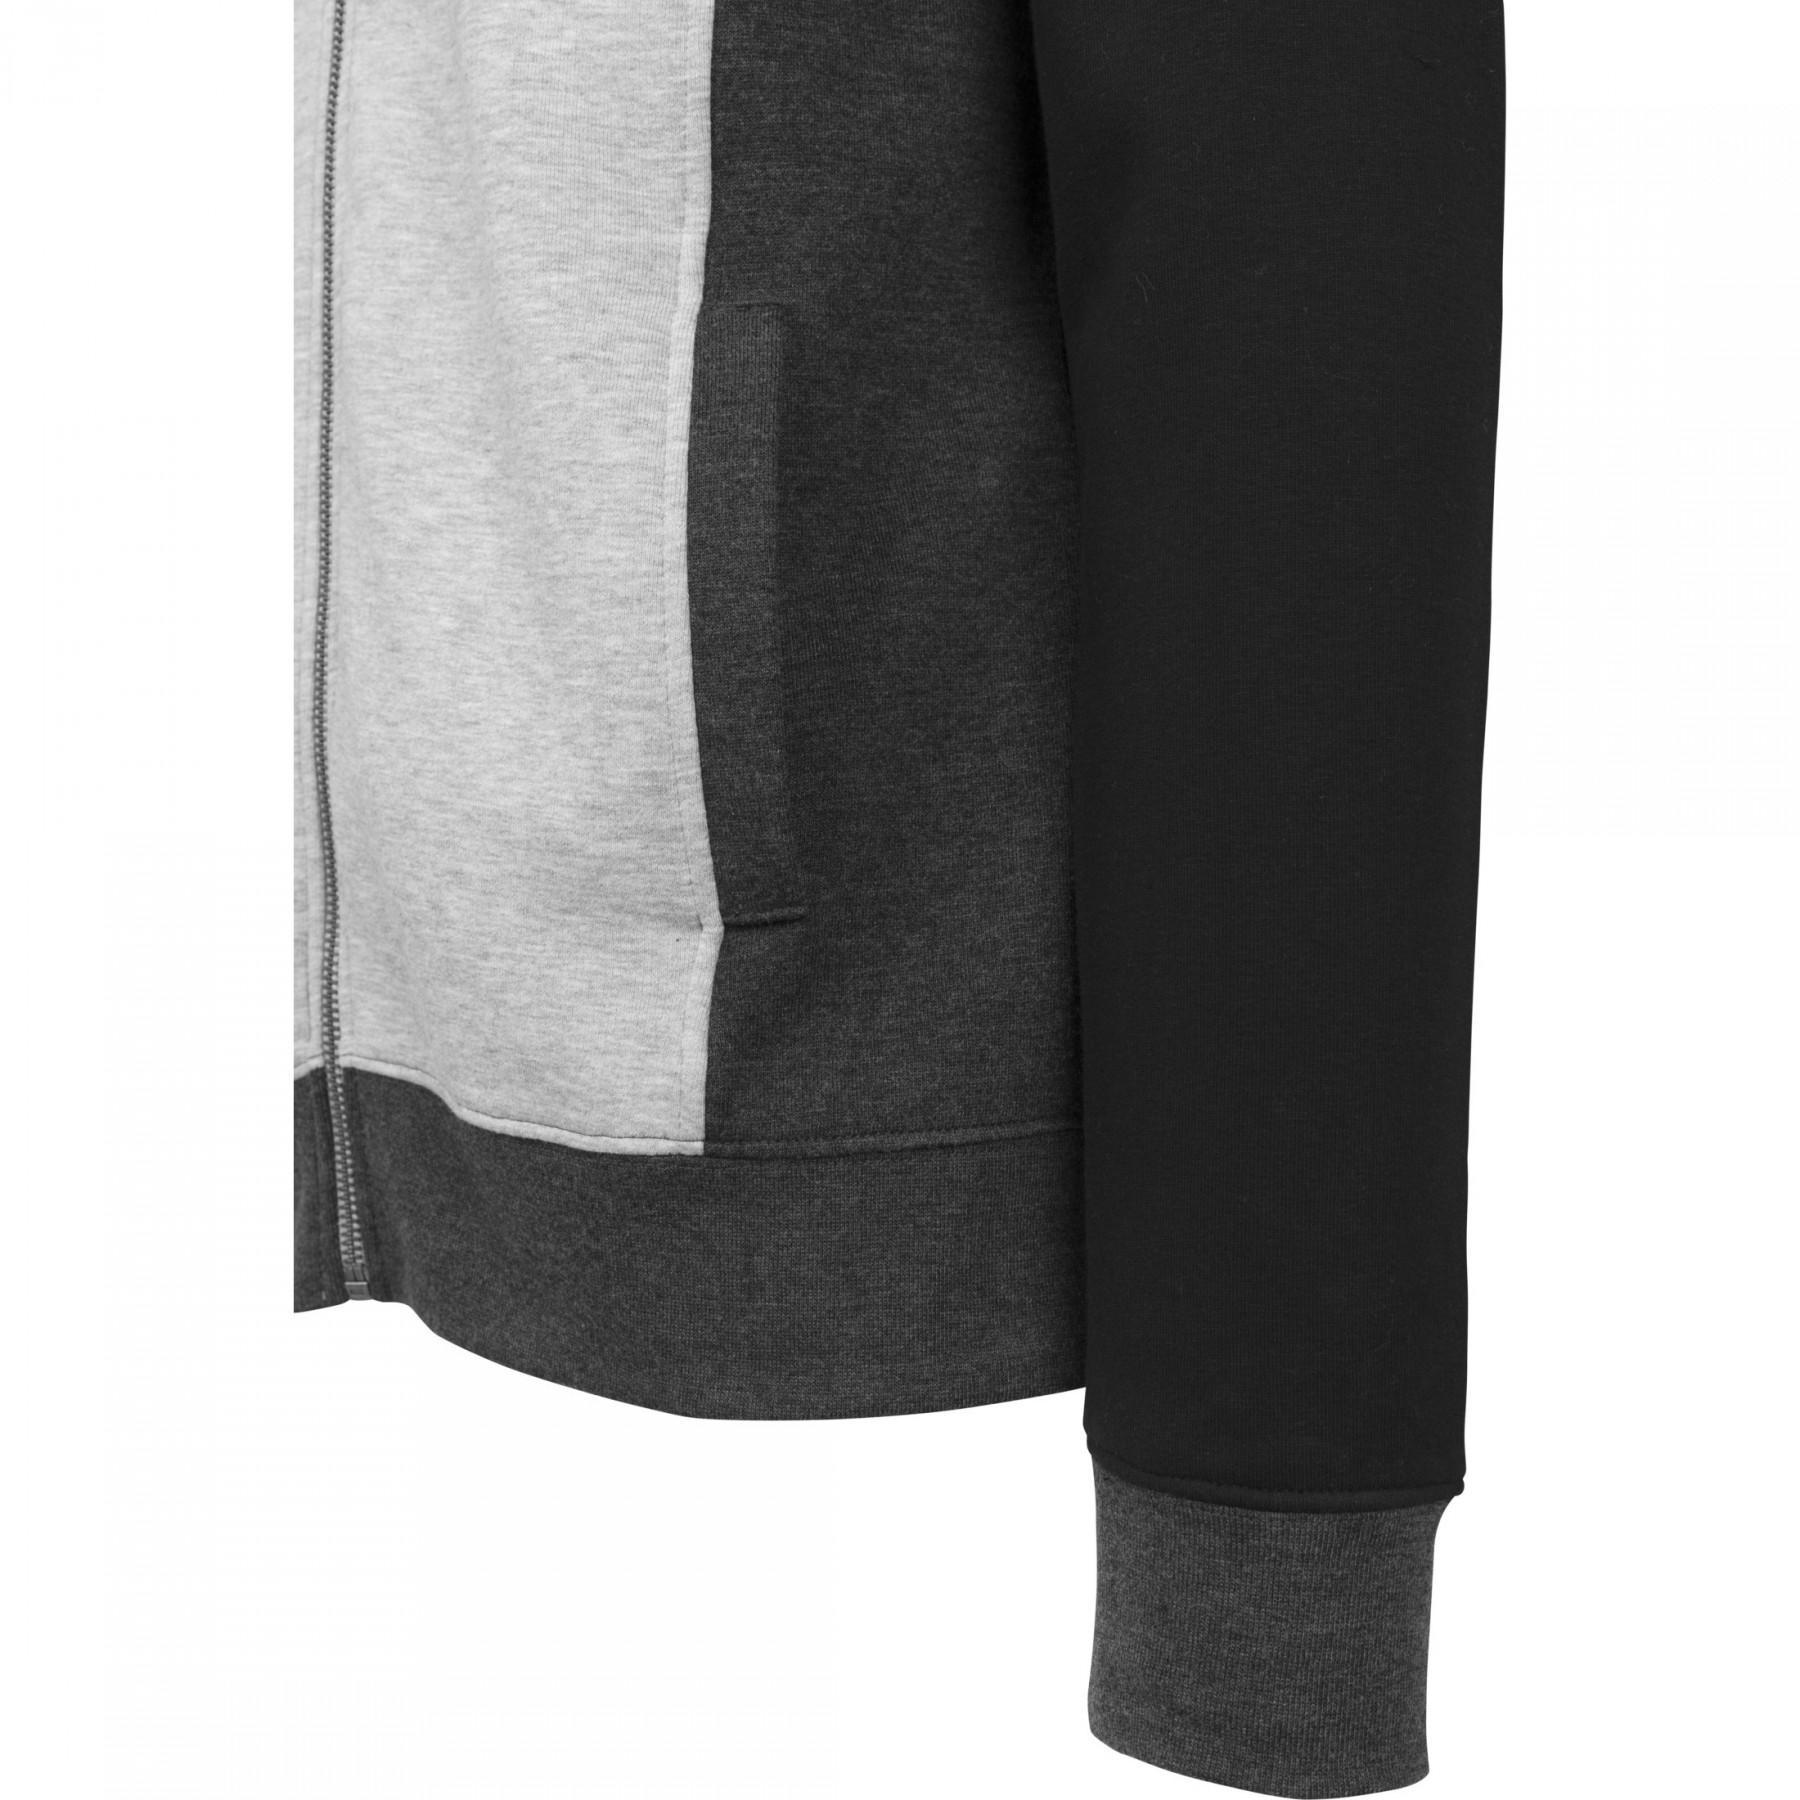 Hooded sweatshirt urban classic 3-tone sweat zip